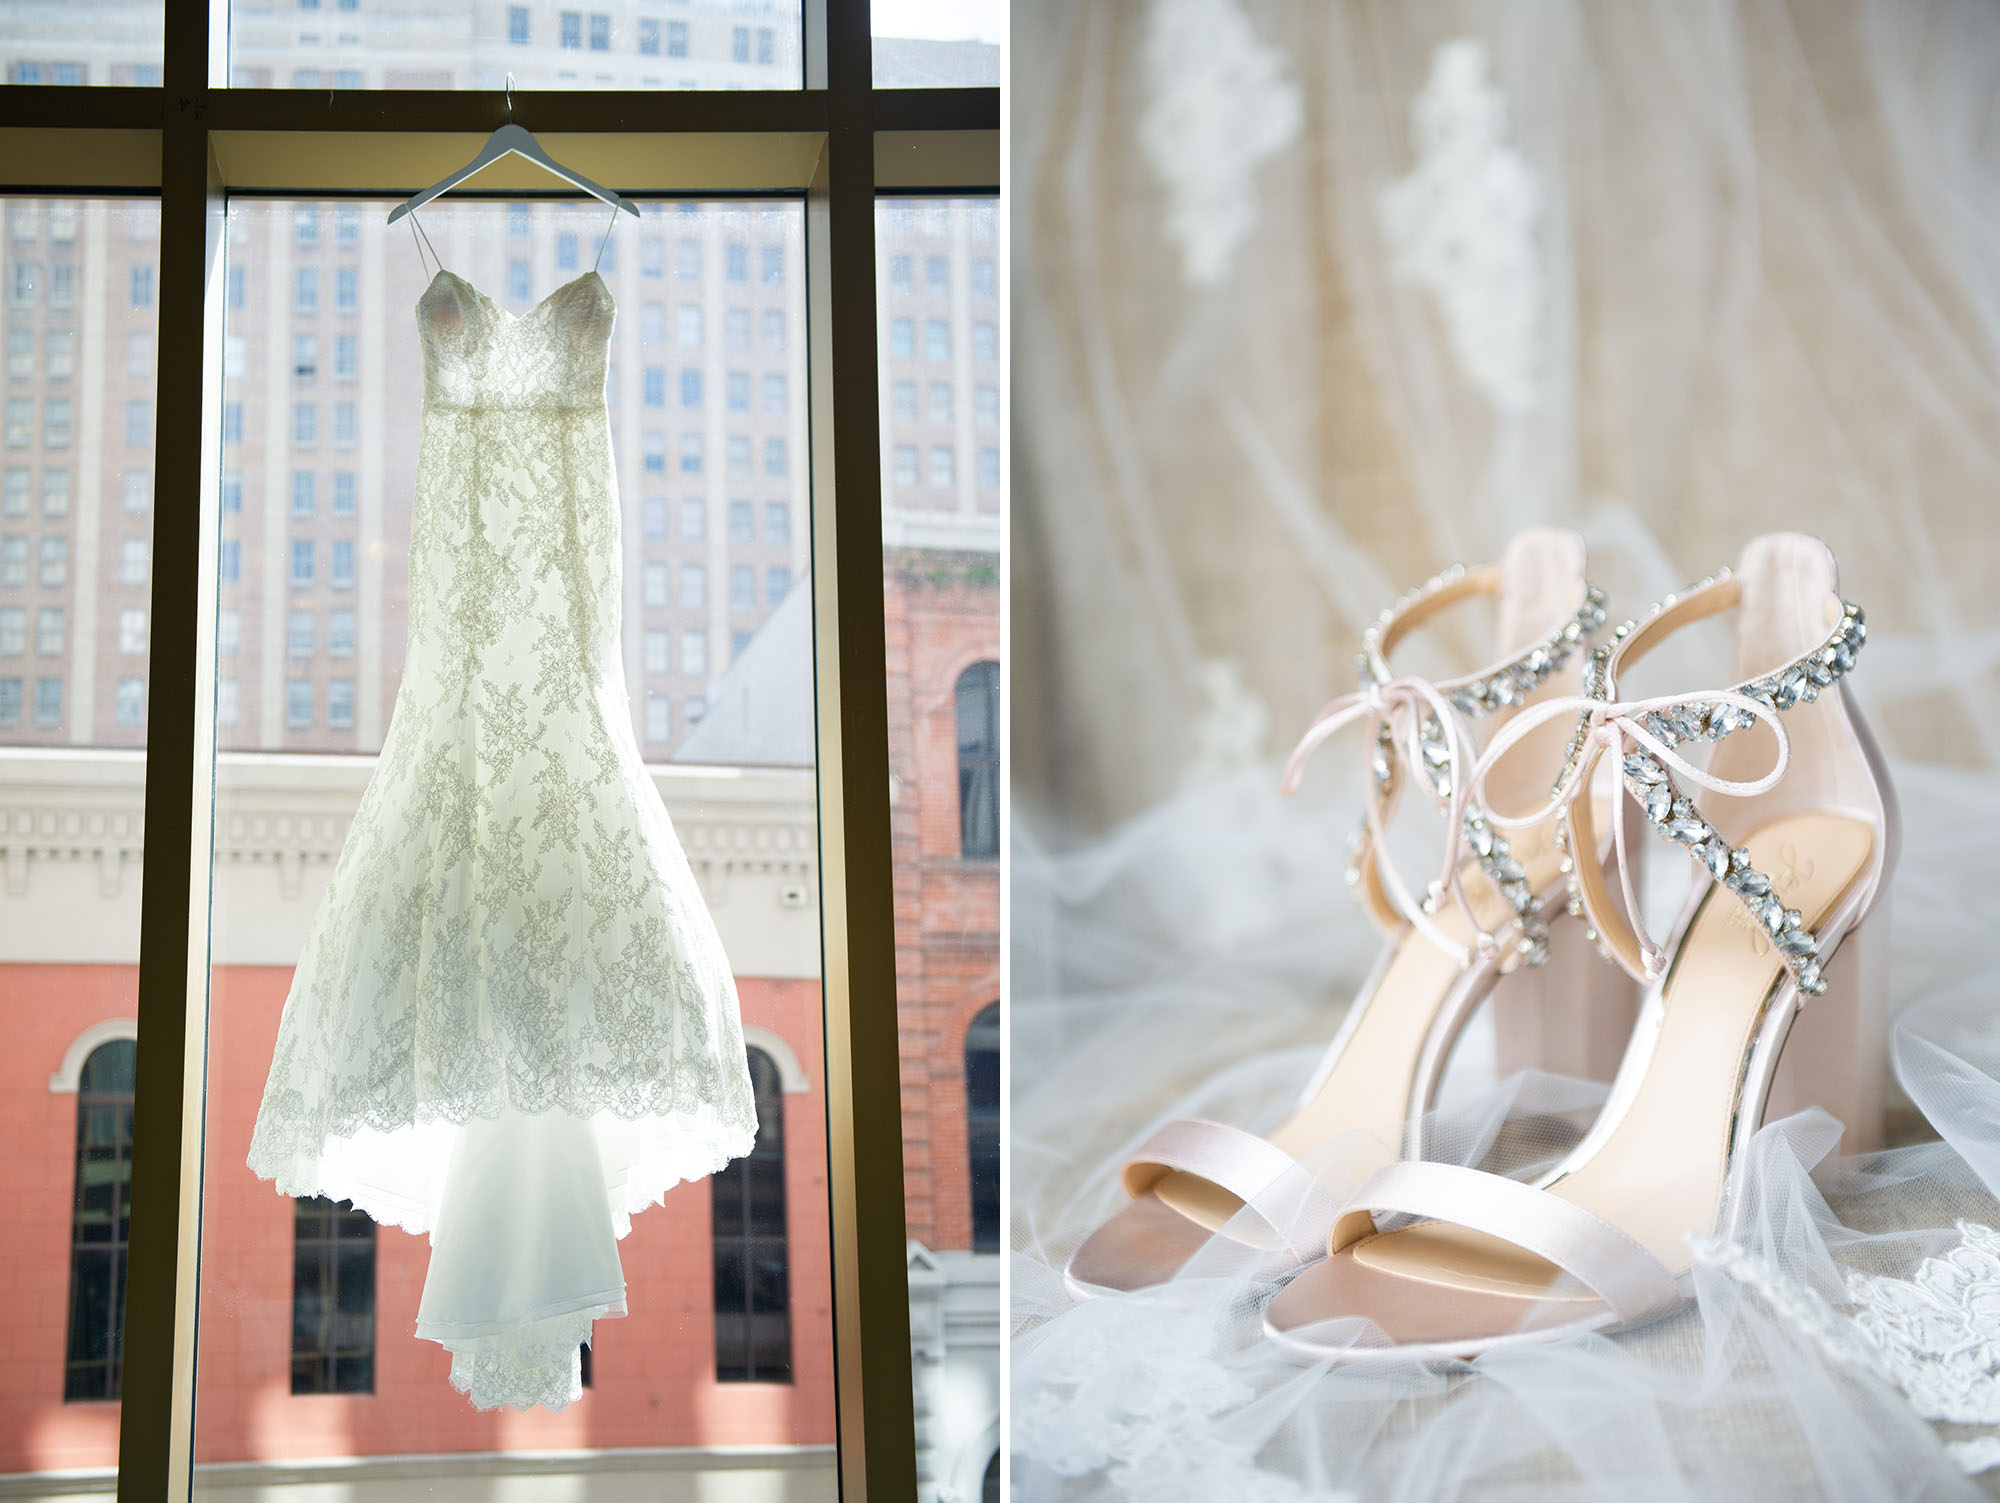 Wedding dress hanging; bride's shoes